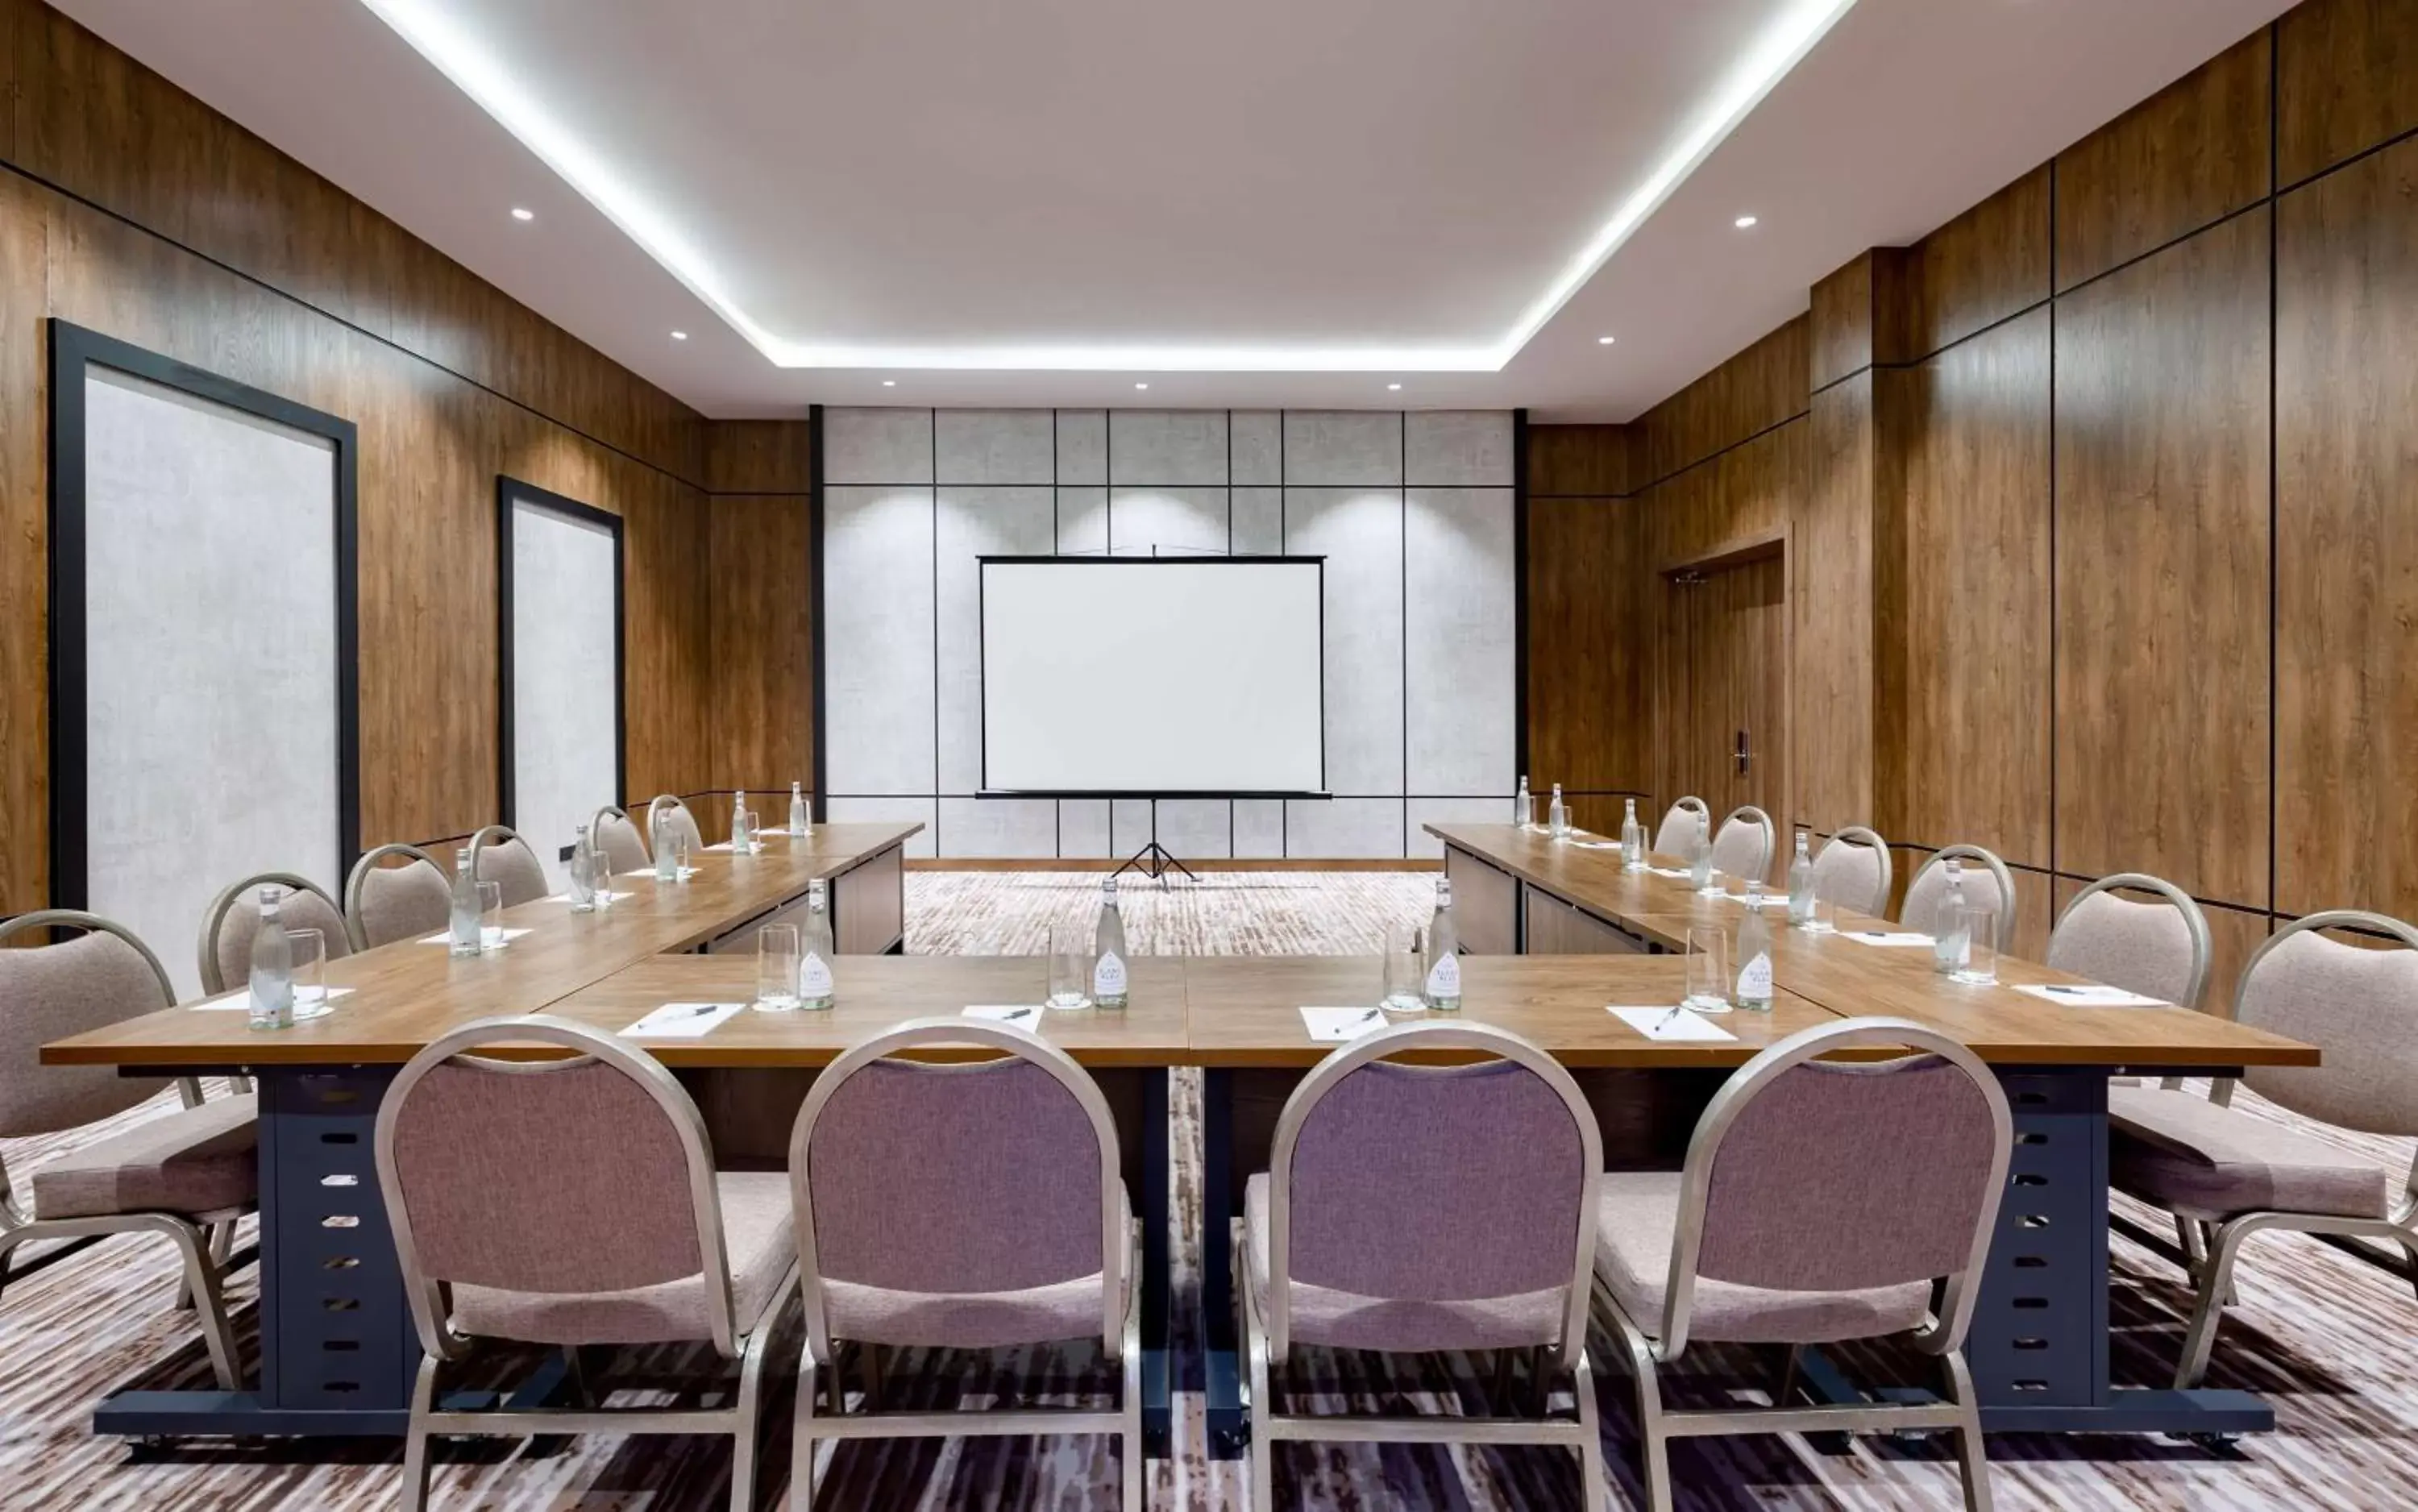 Meeting/conference room in Hilton Garden Inn Samarkand